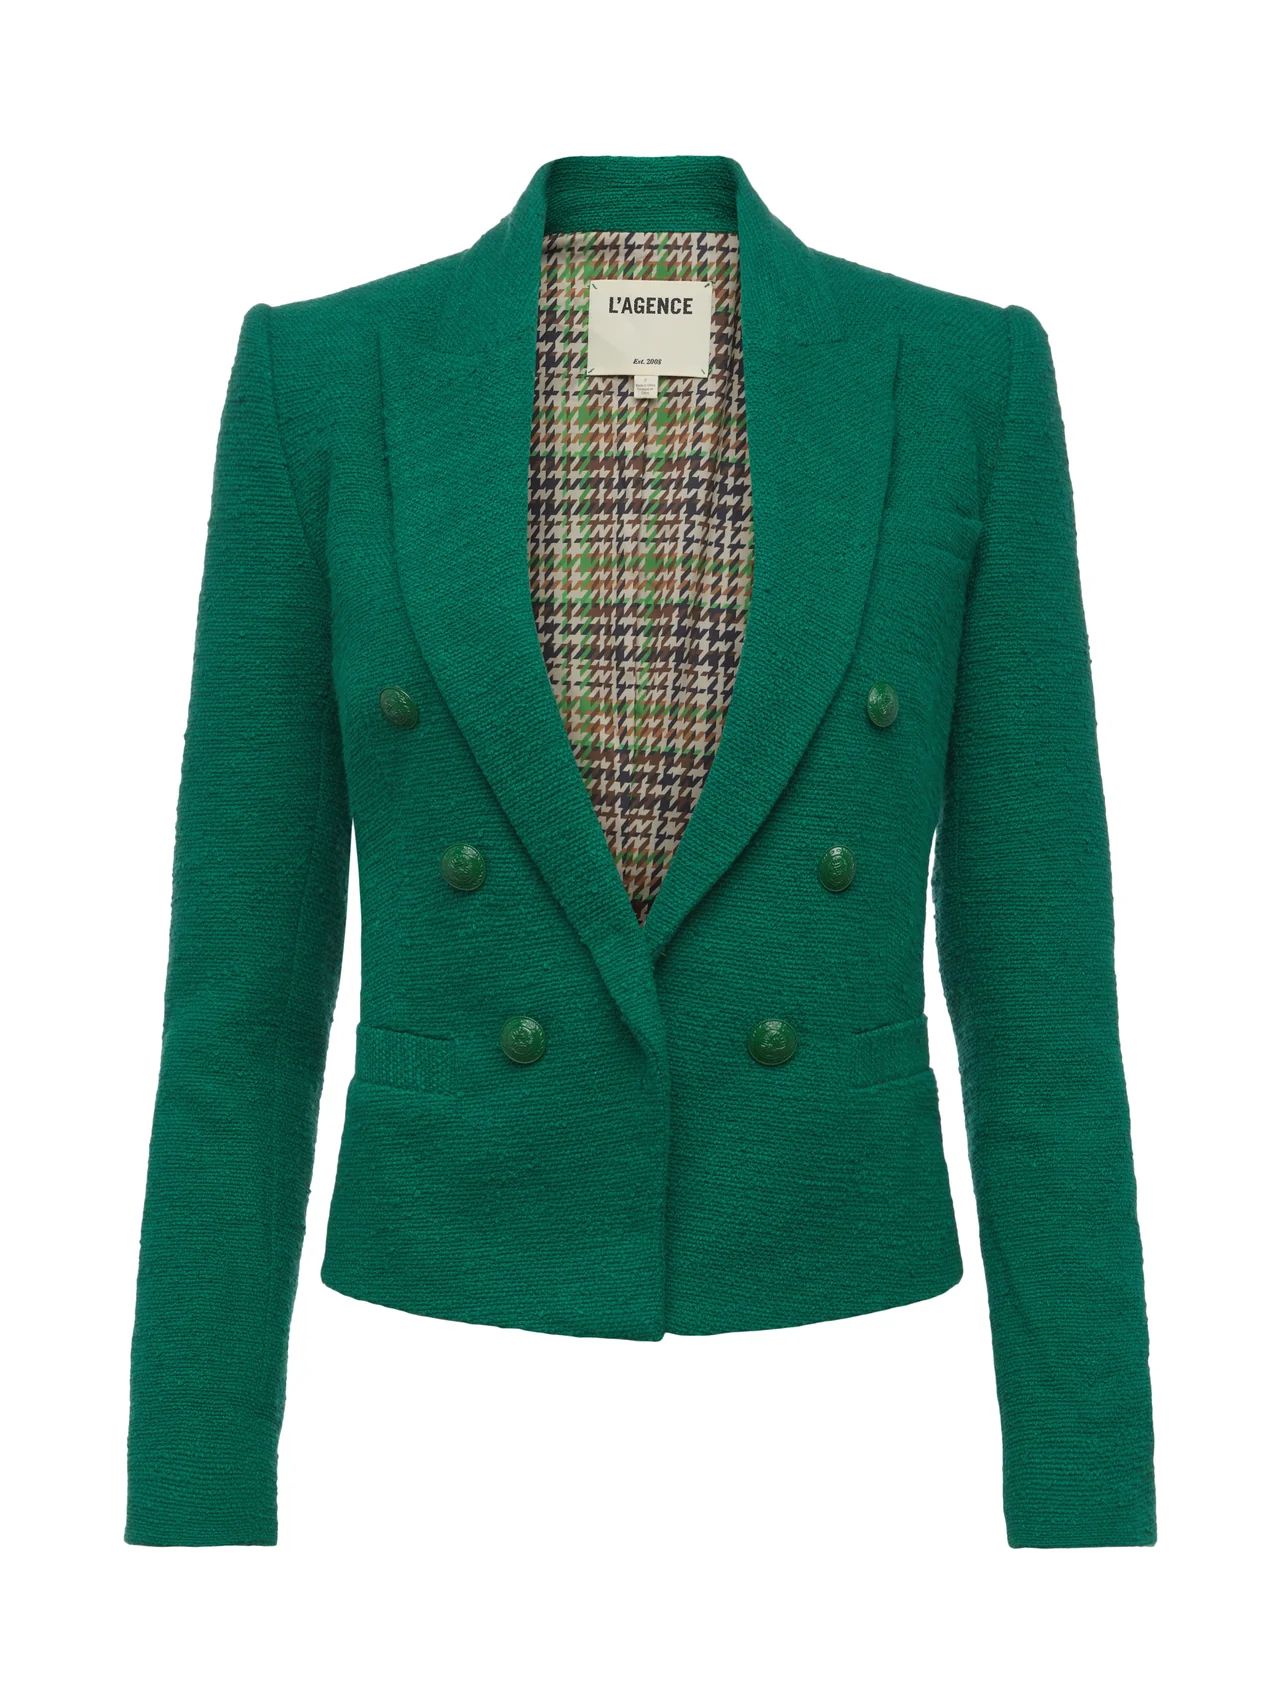 L'AGENCE Brooke Tweed Blazer In Clover Green/Green Multi Twill Plaid | L'Agence